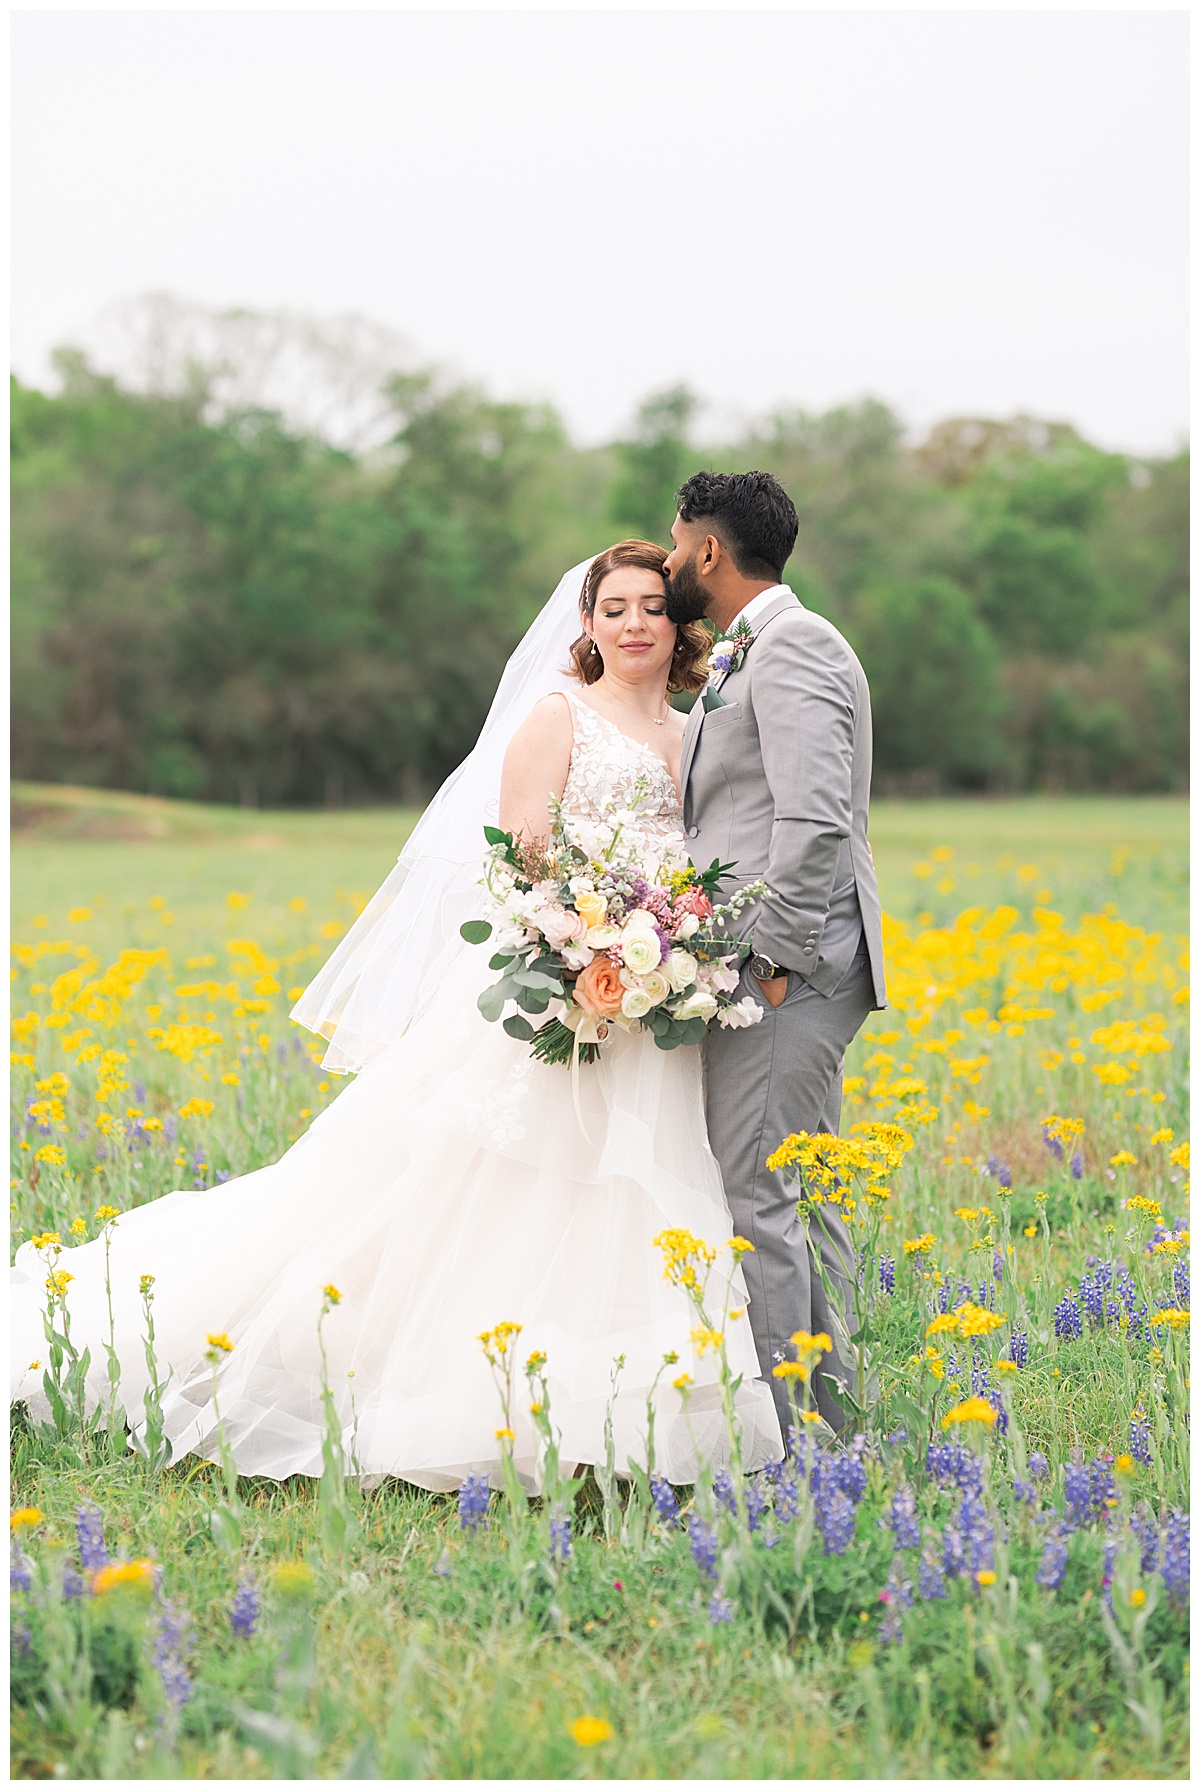 Houston’s Best Wedding Photographers